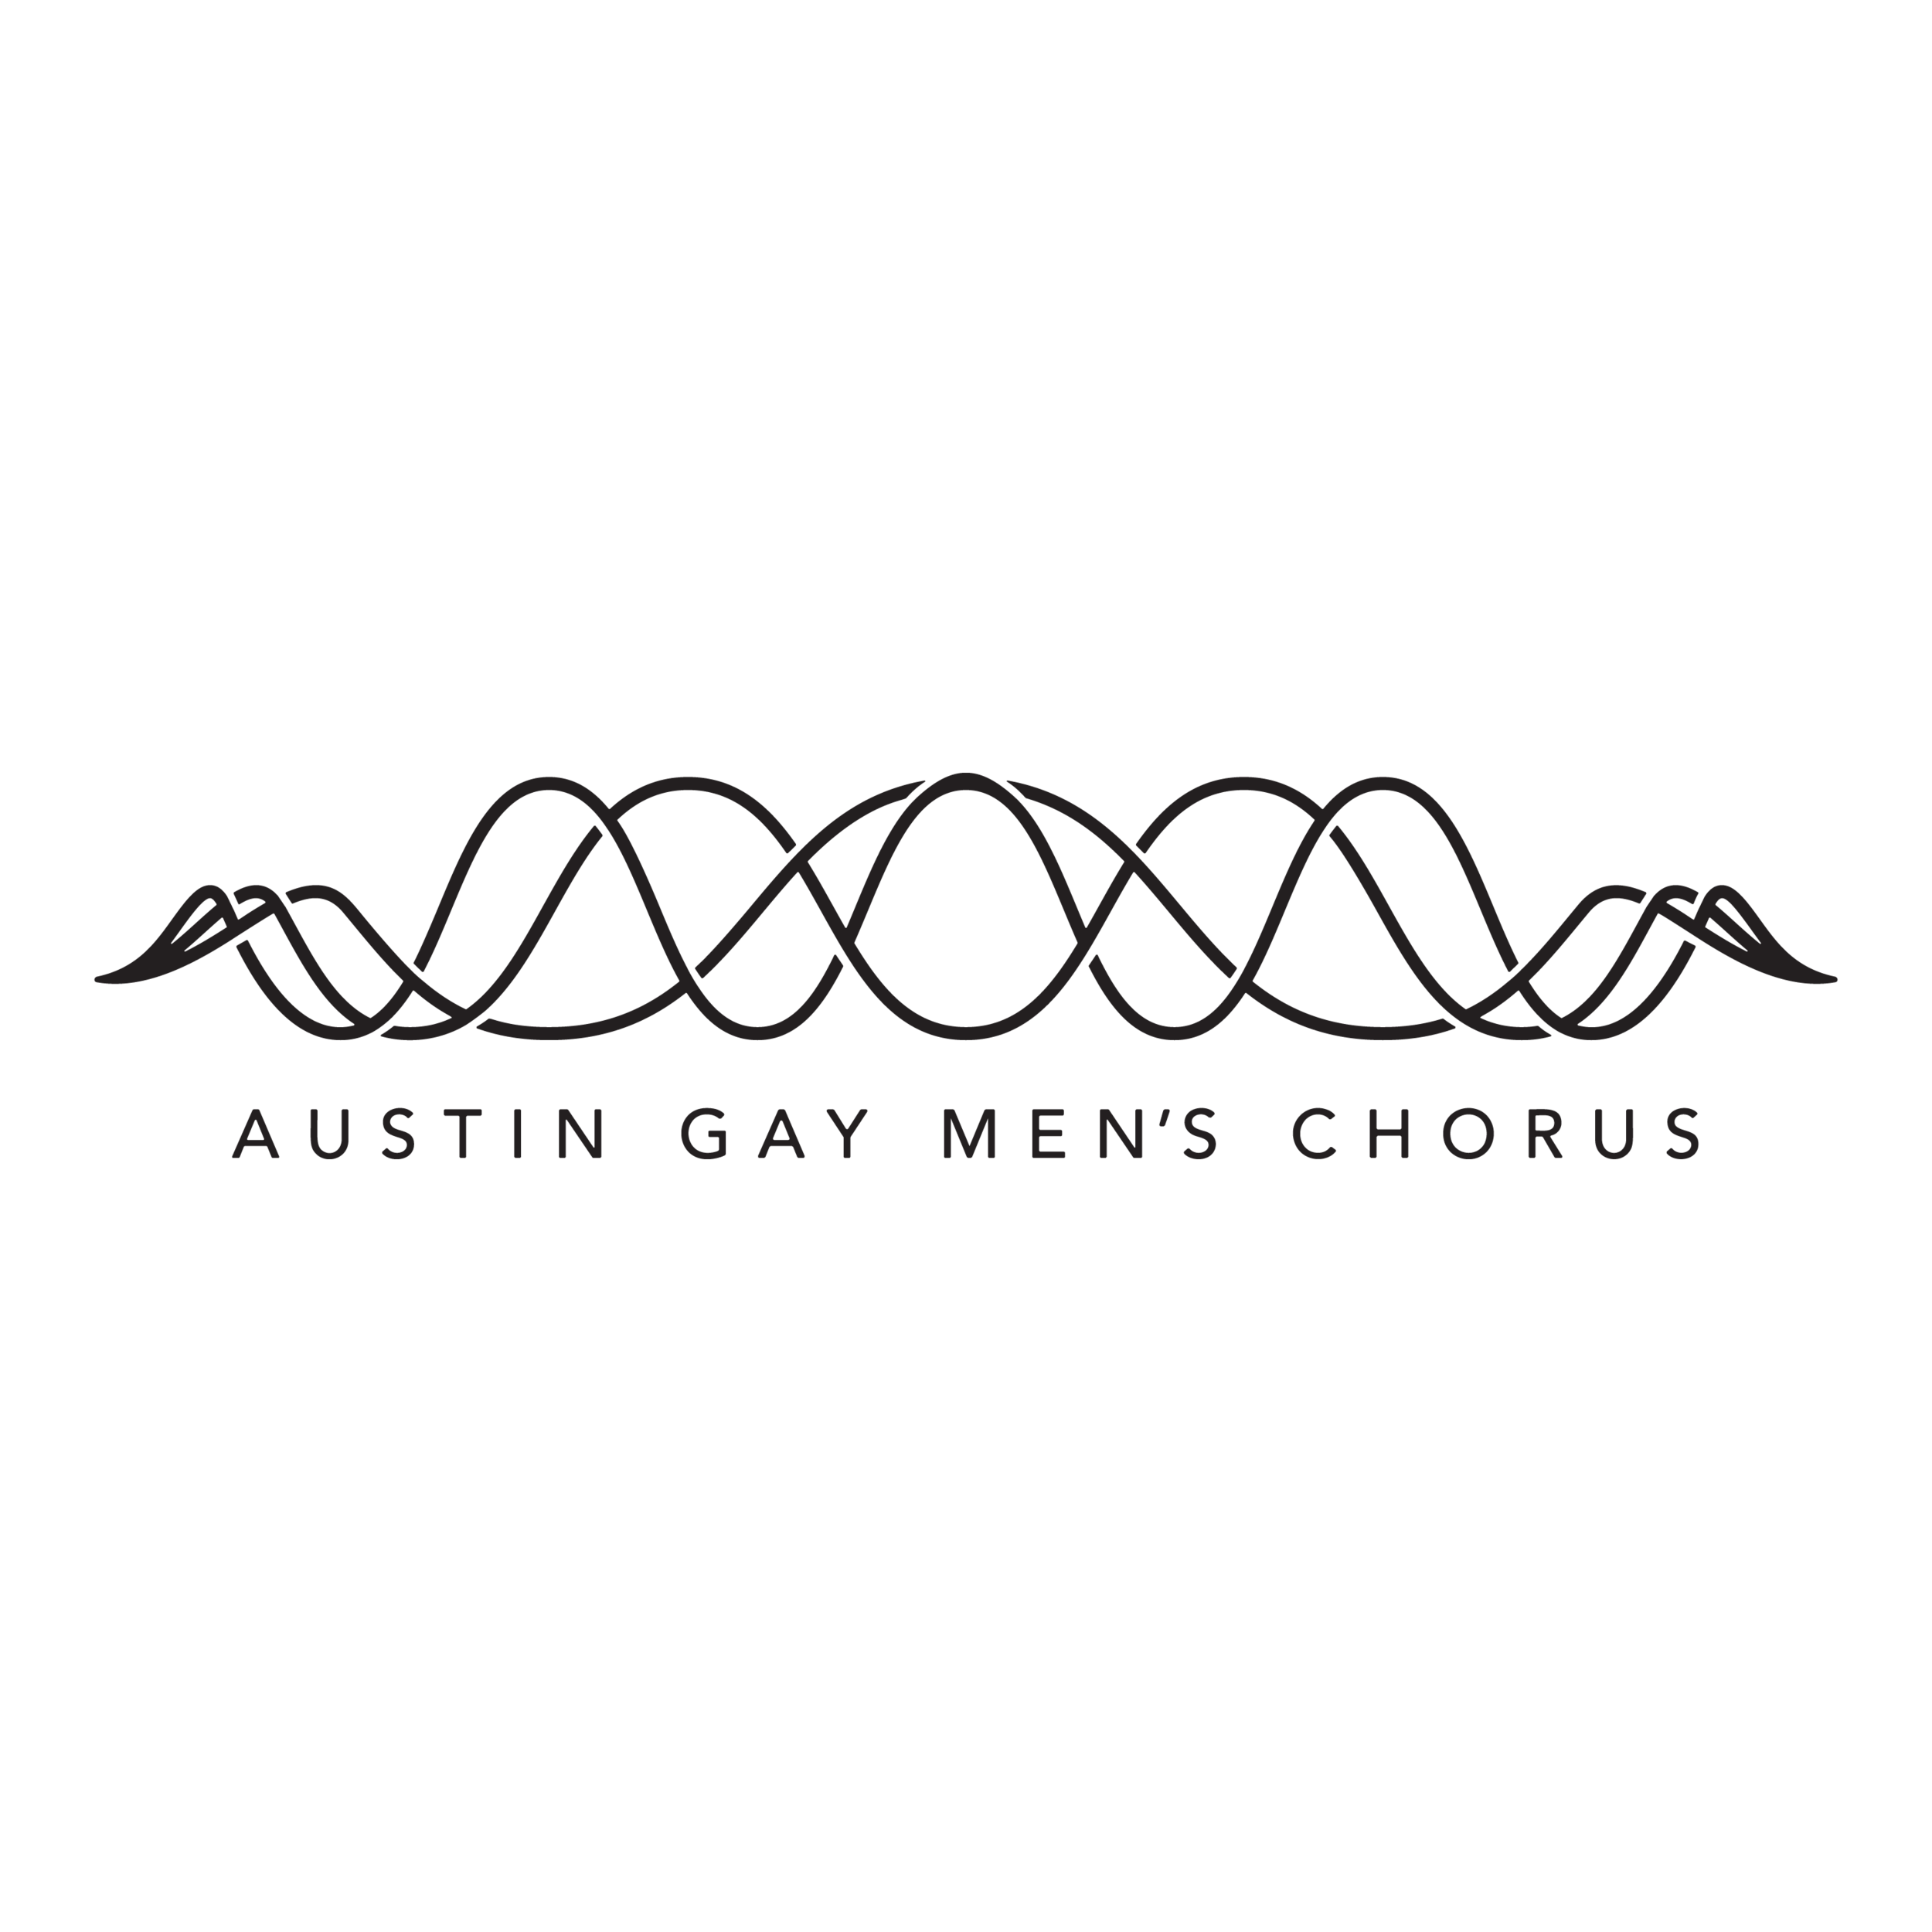 Austin Gay Men's Chorus